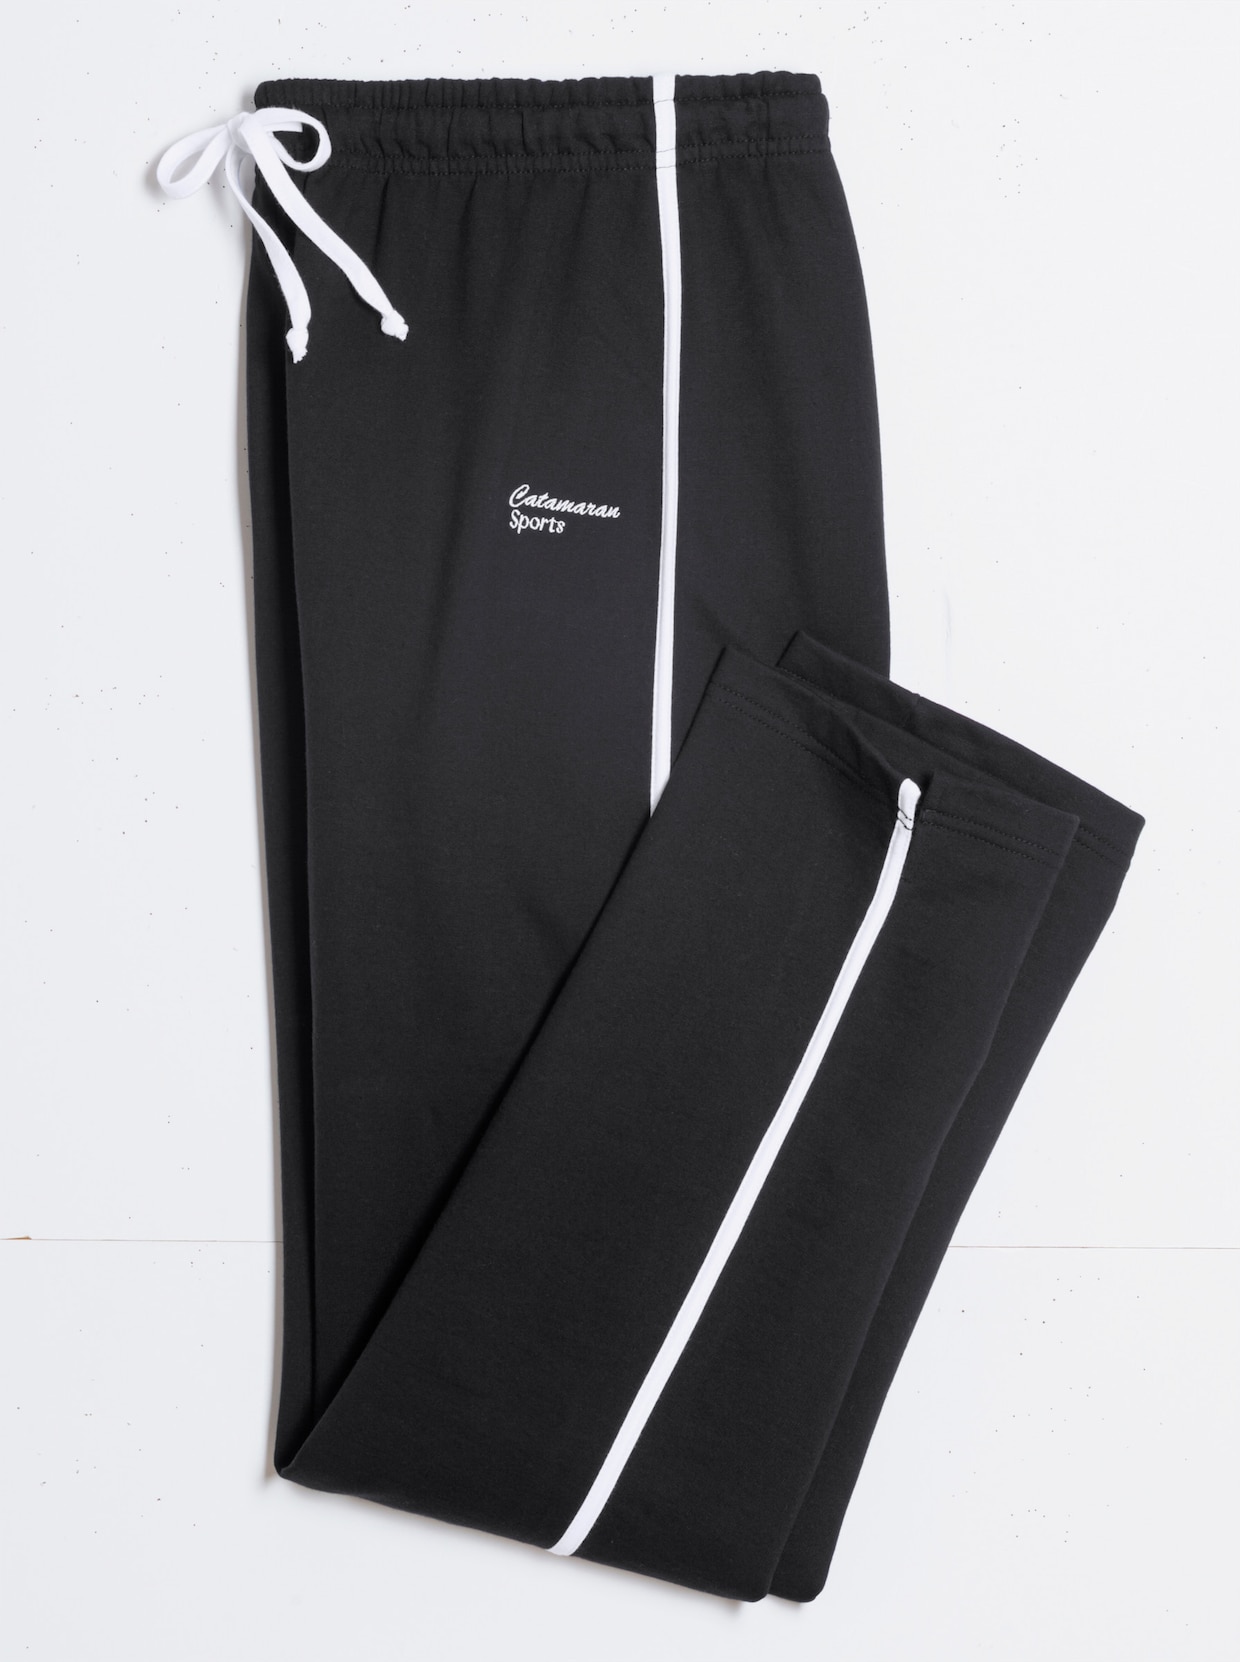 Catamaran Sports Kalhoty pro volný čas - černá-bílá